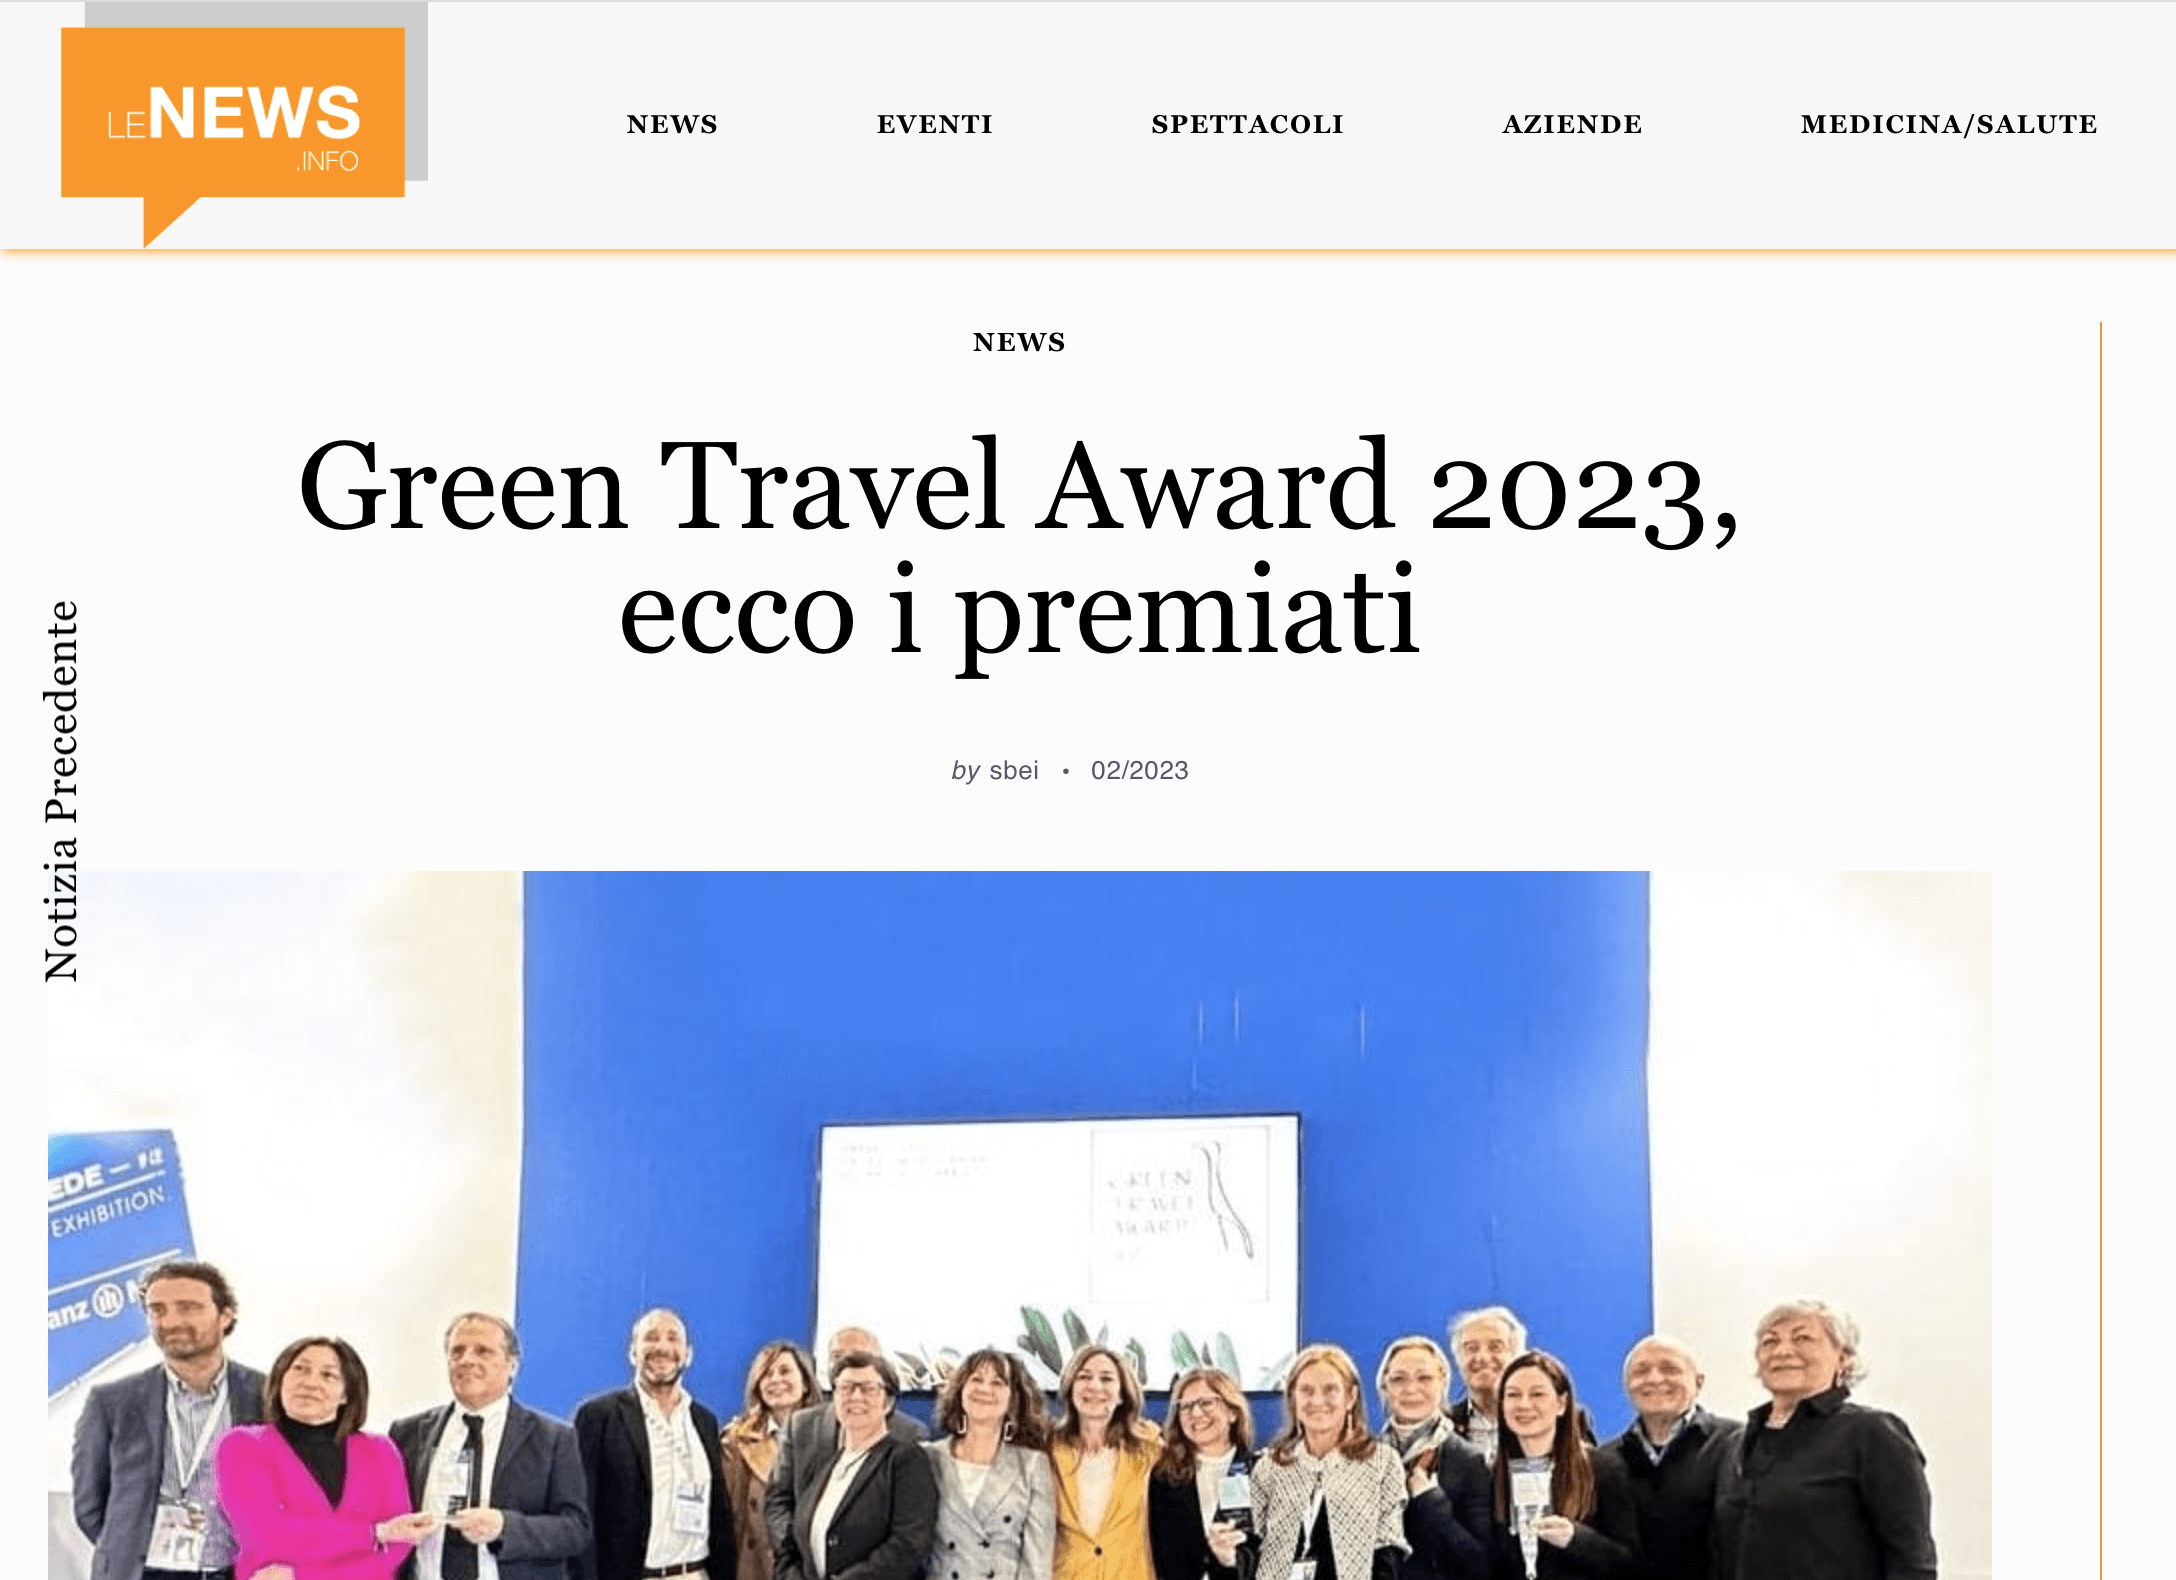 green travel award ecco i premiati lenews.info